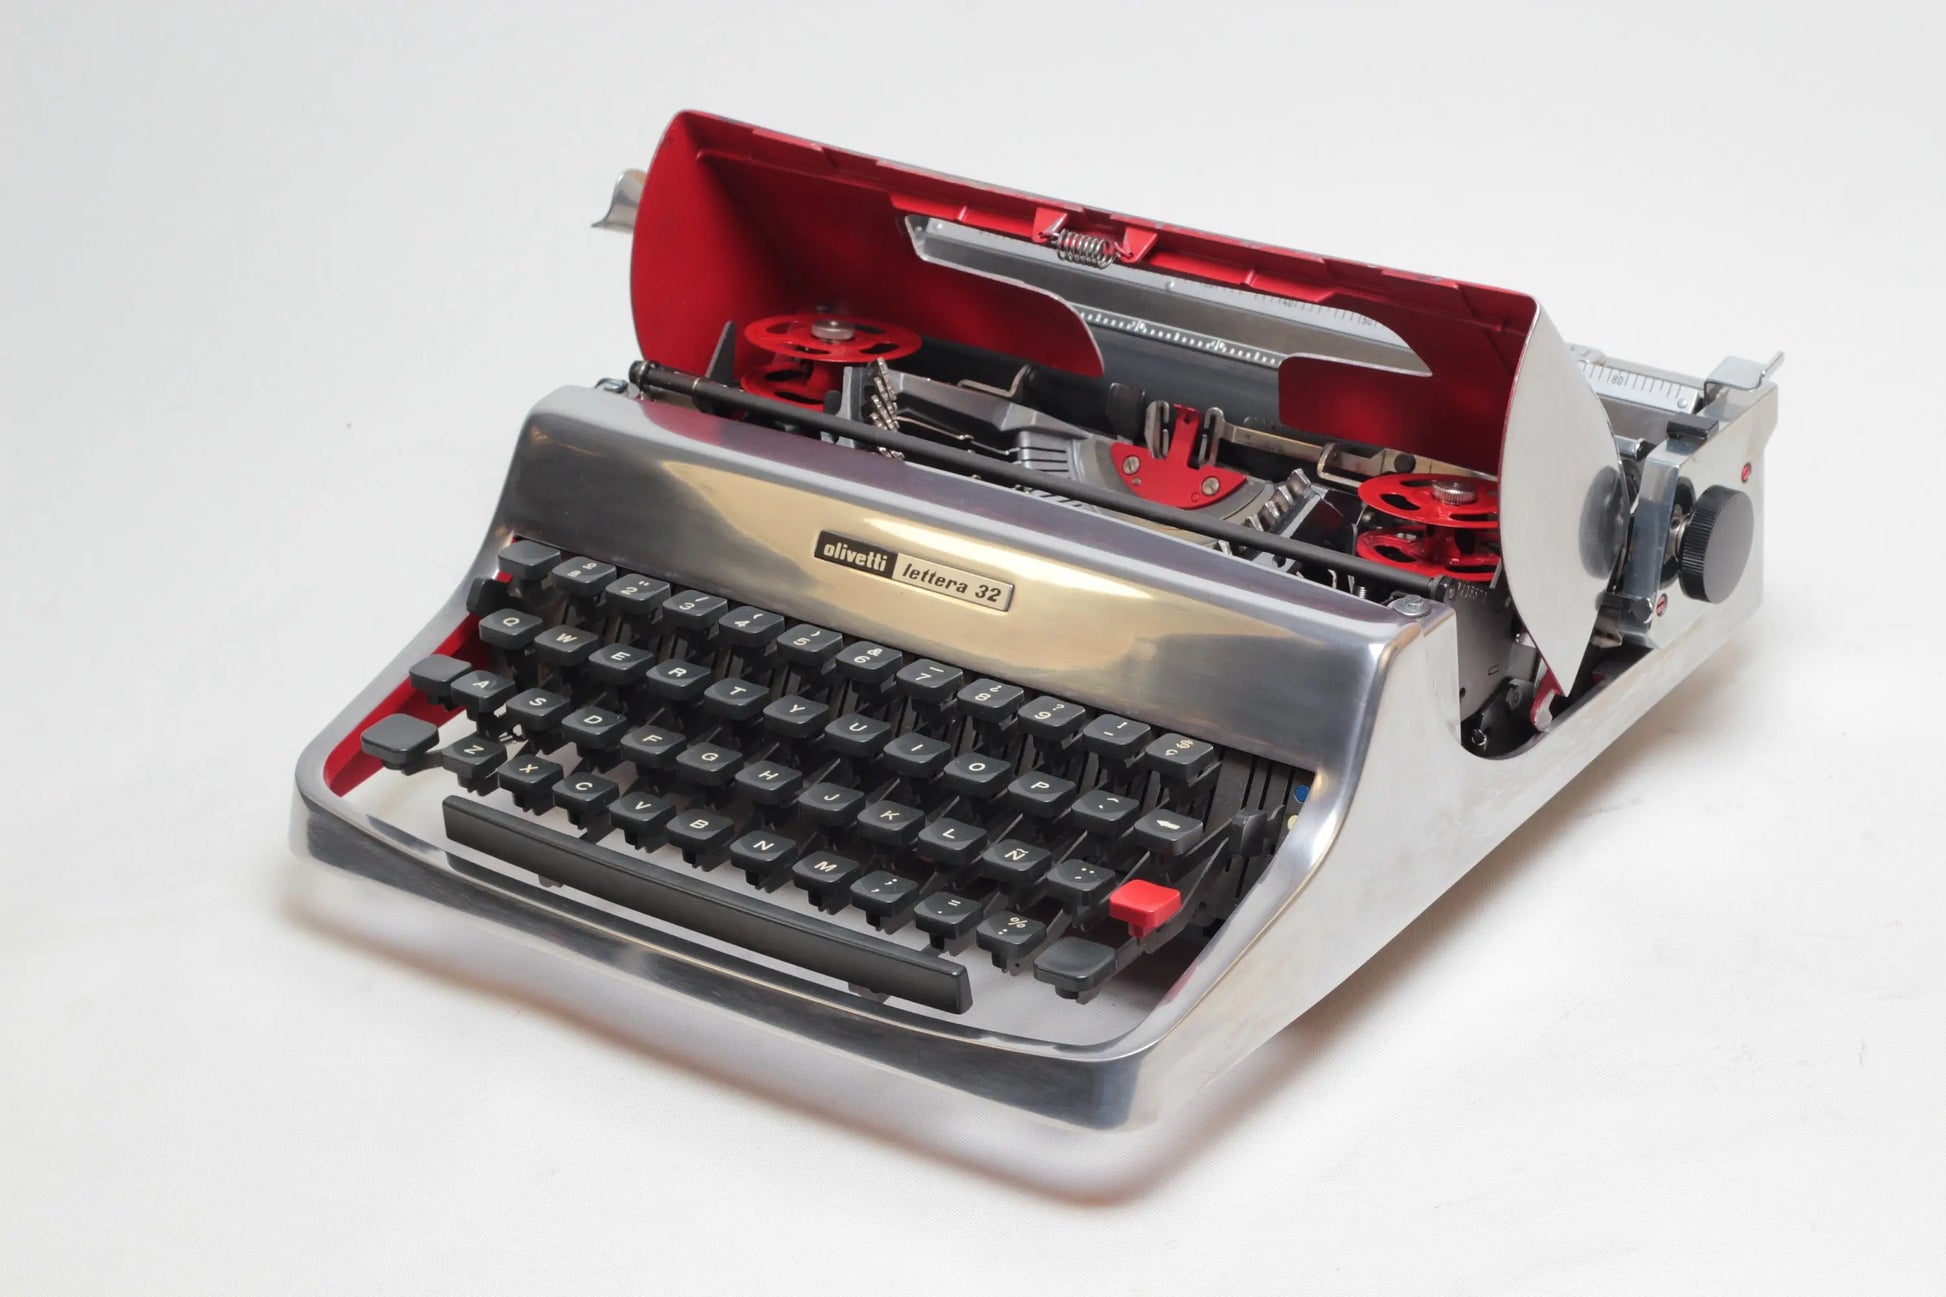 SALE! - Limited Edition Olivetti Lettera 32 "Chrome" Aluminum Typewriter, Vintage, Professionally Serviced - ElGranero Typewriter.Company